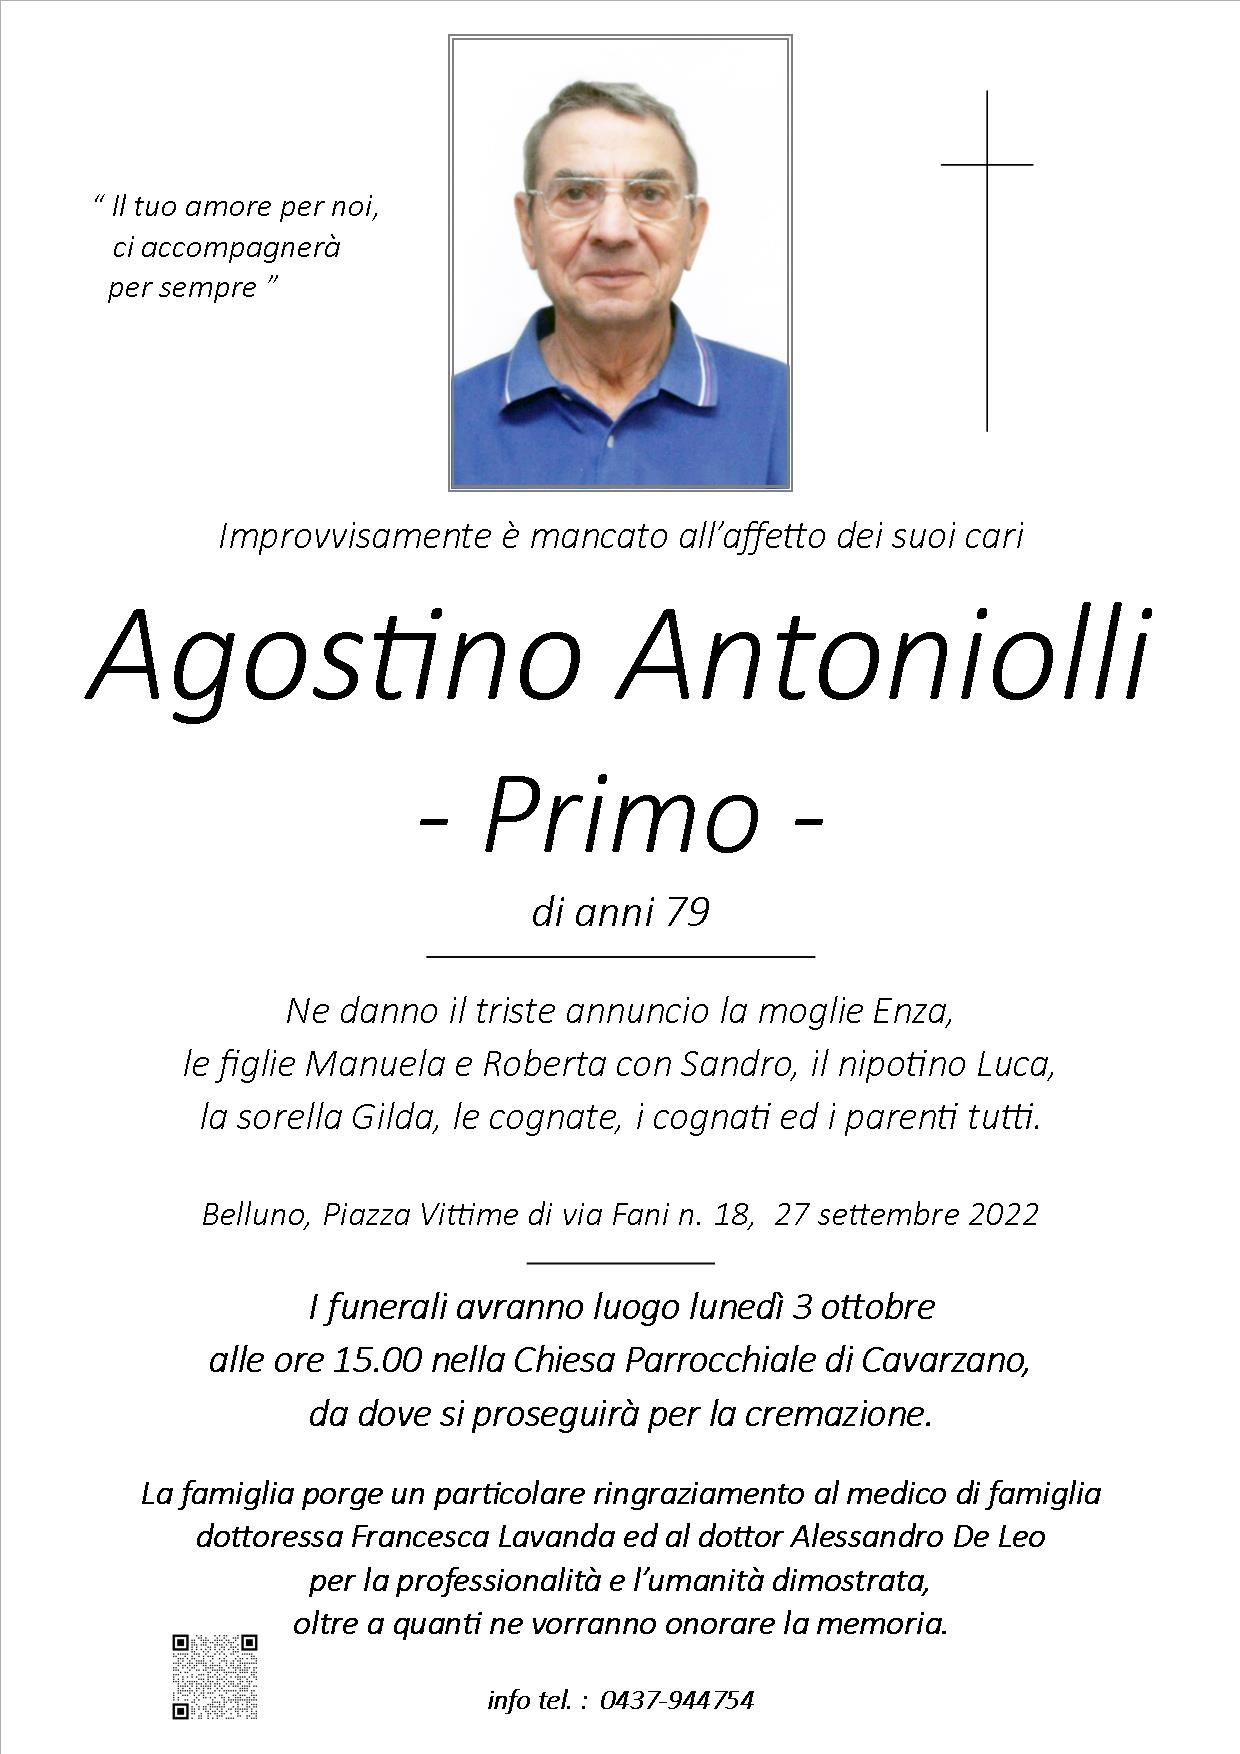 Antoniolli Agostino